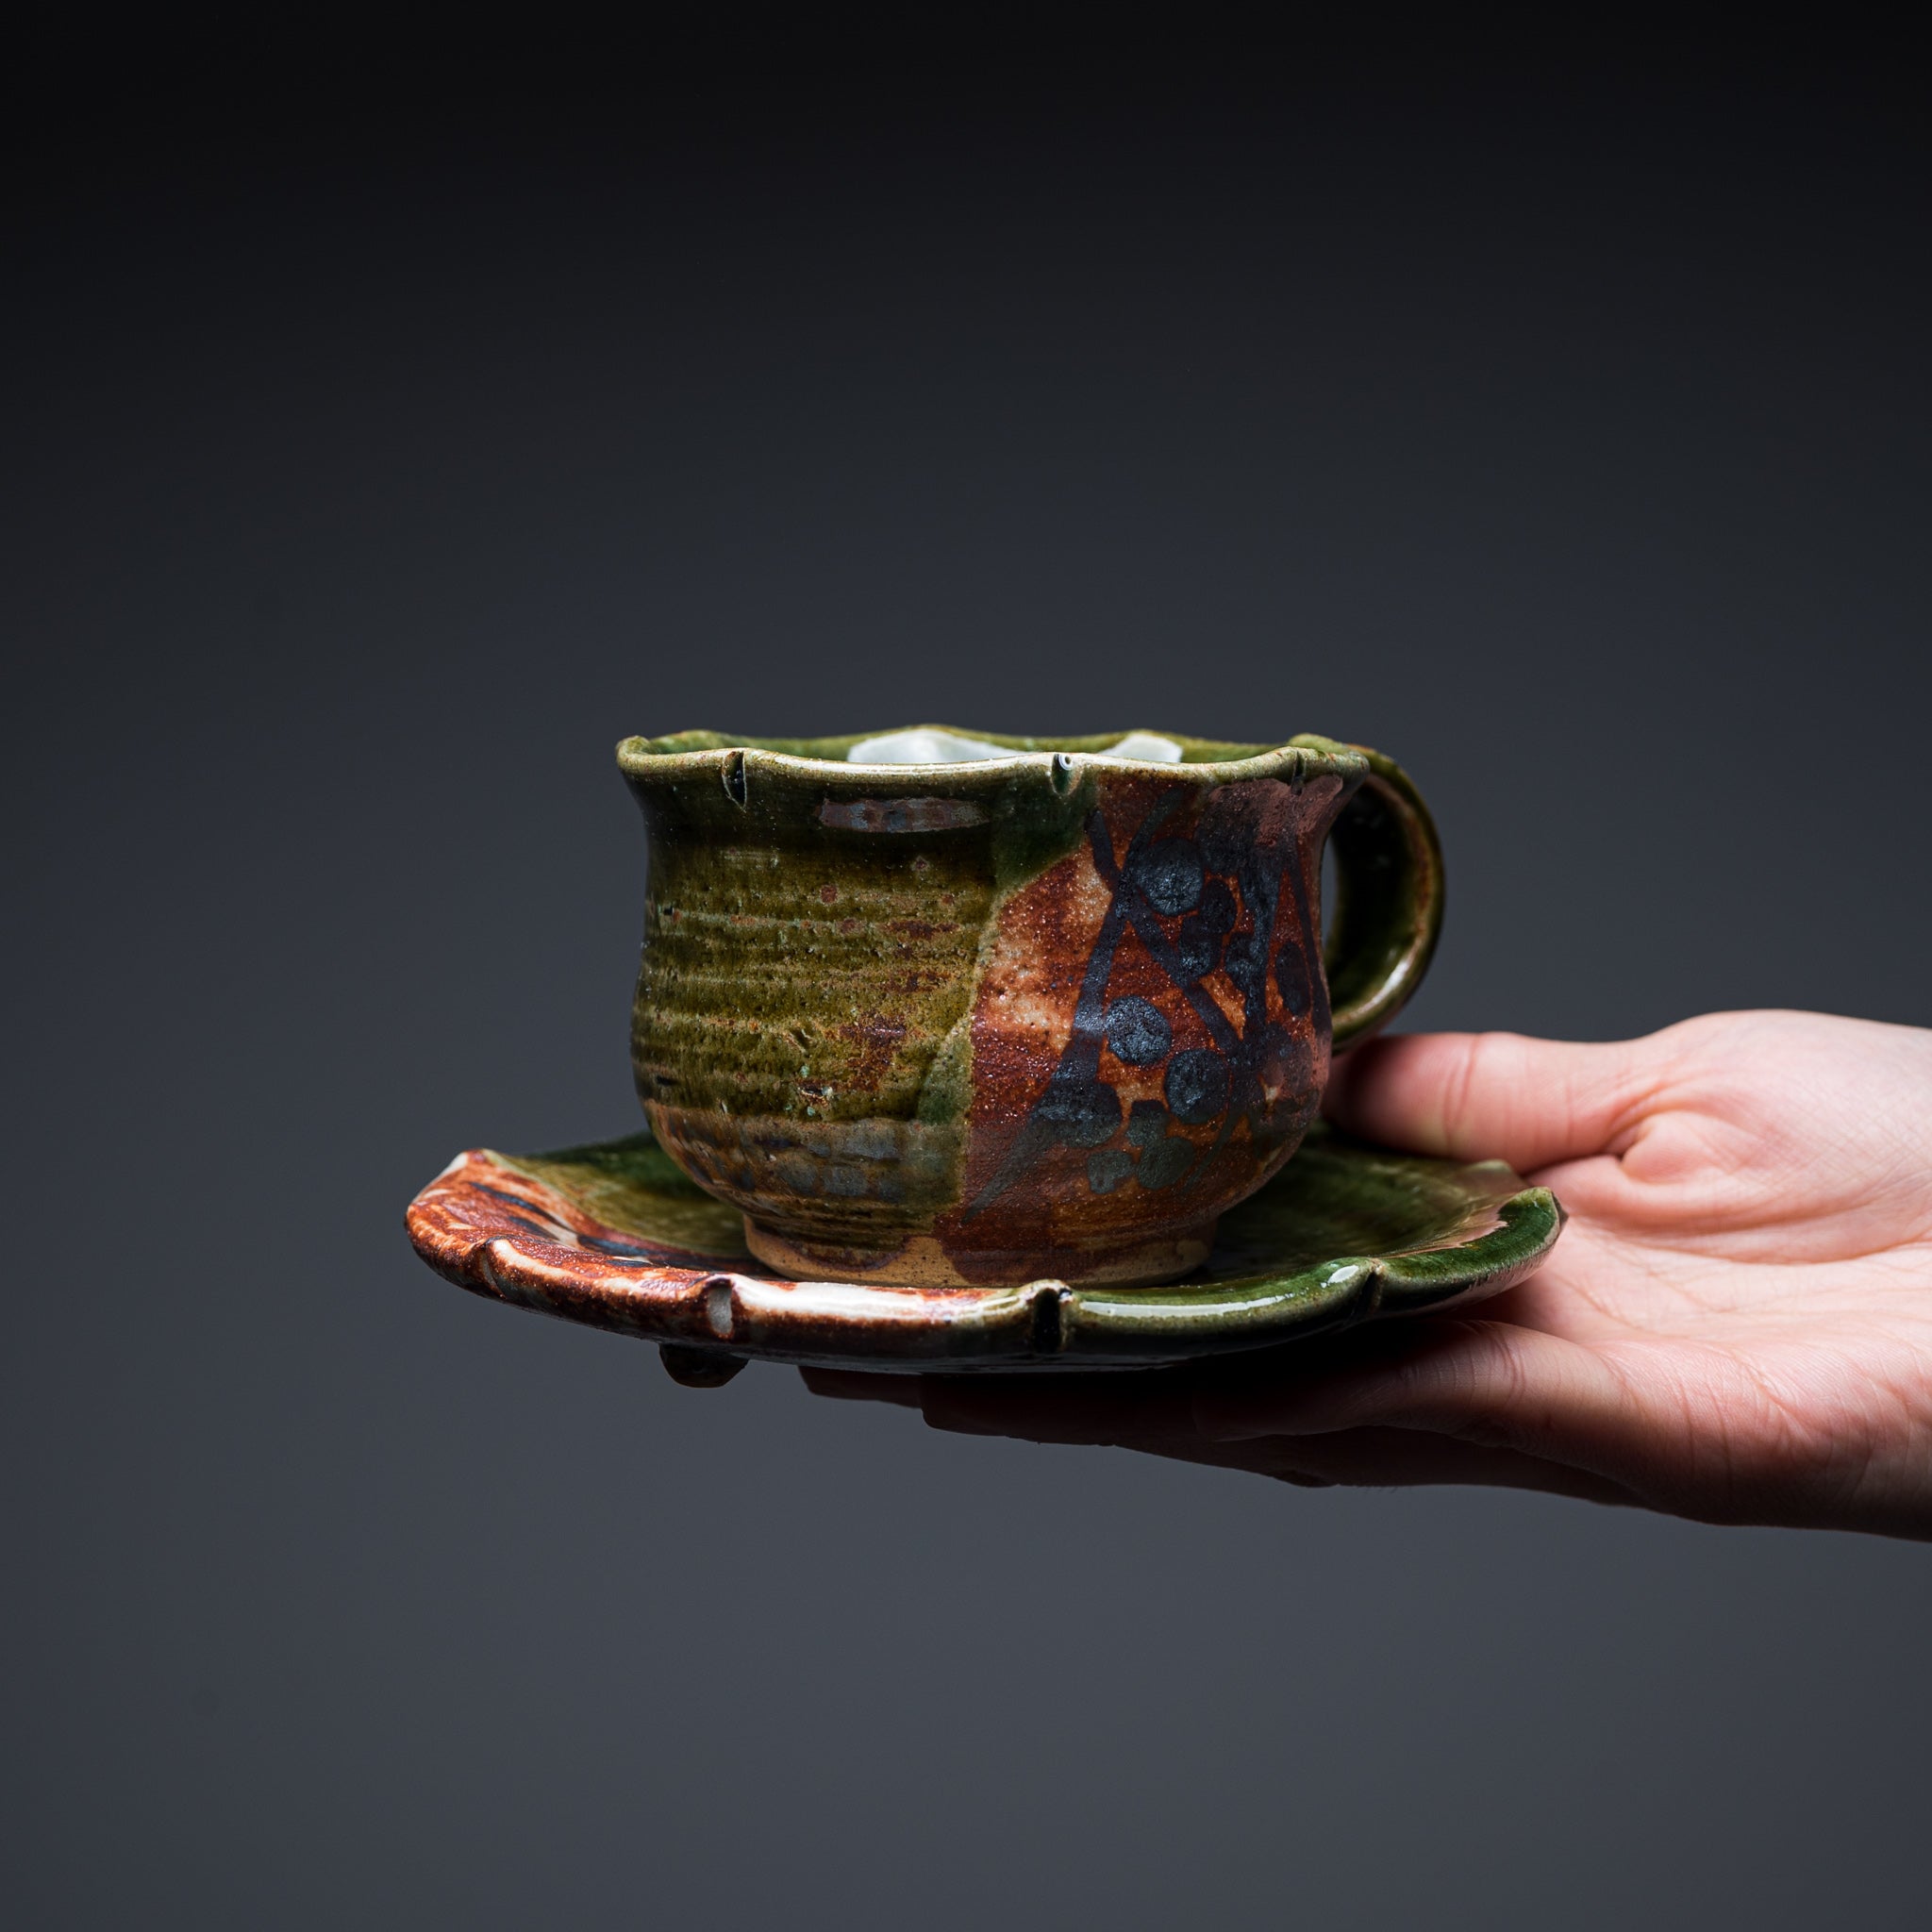 Handmade Tea Cup and Saucer - Oribe